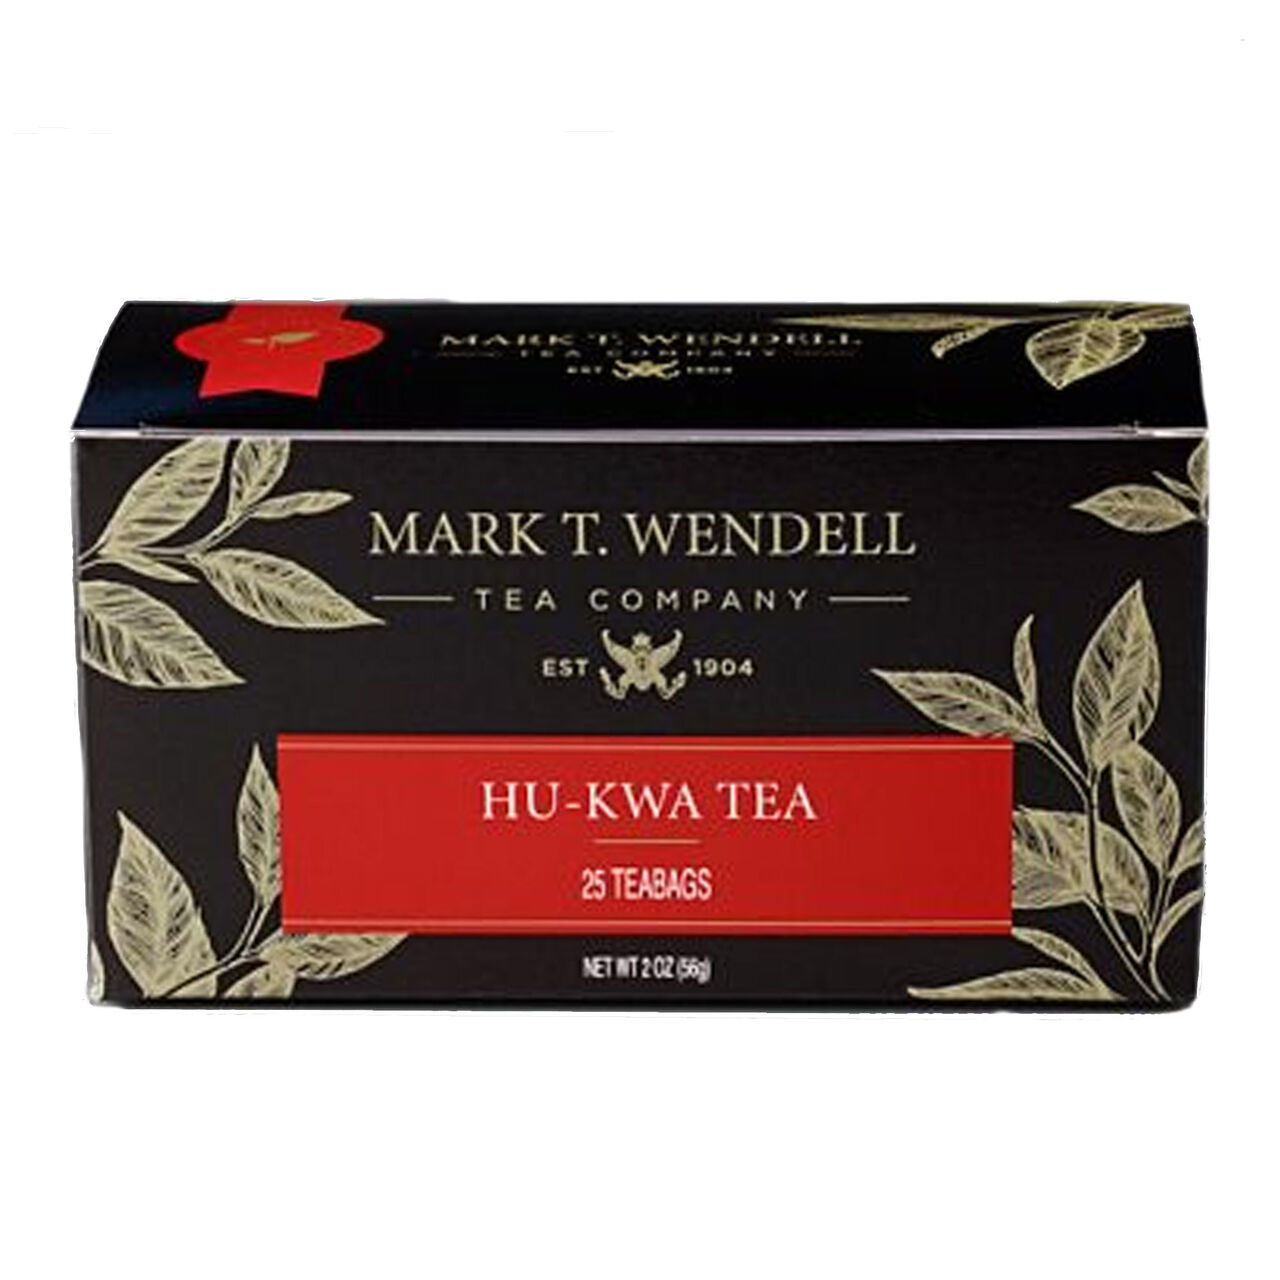 Hu-Kwa 25 Count Tea Bags, , large image number 0